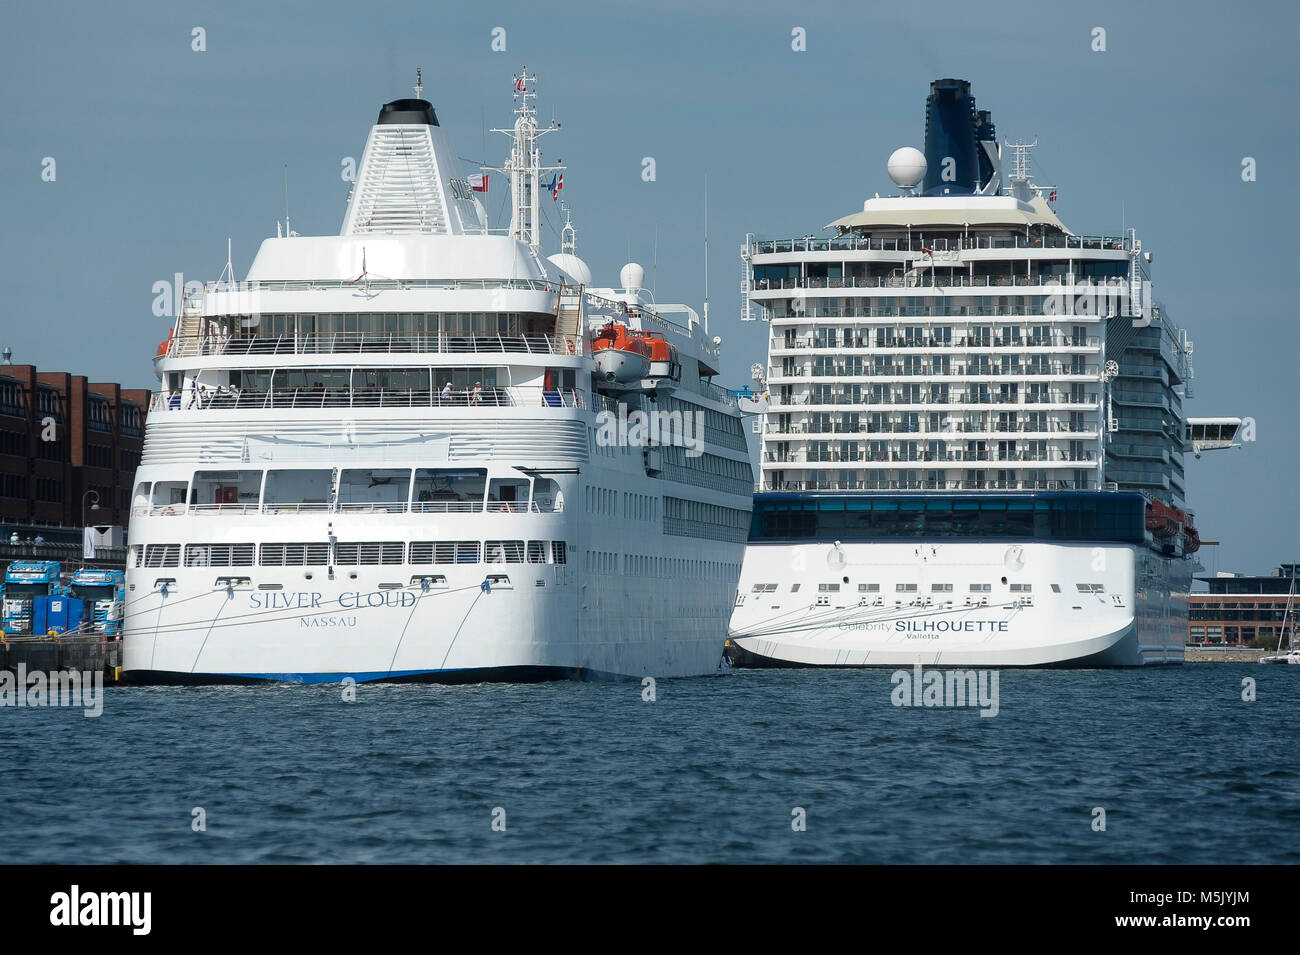 silversea cruise copenhagen